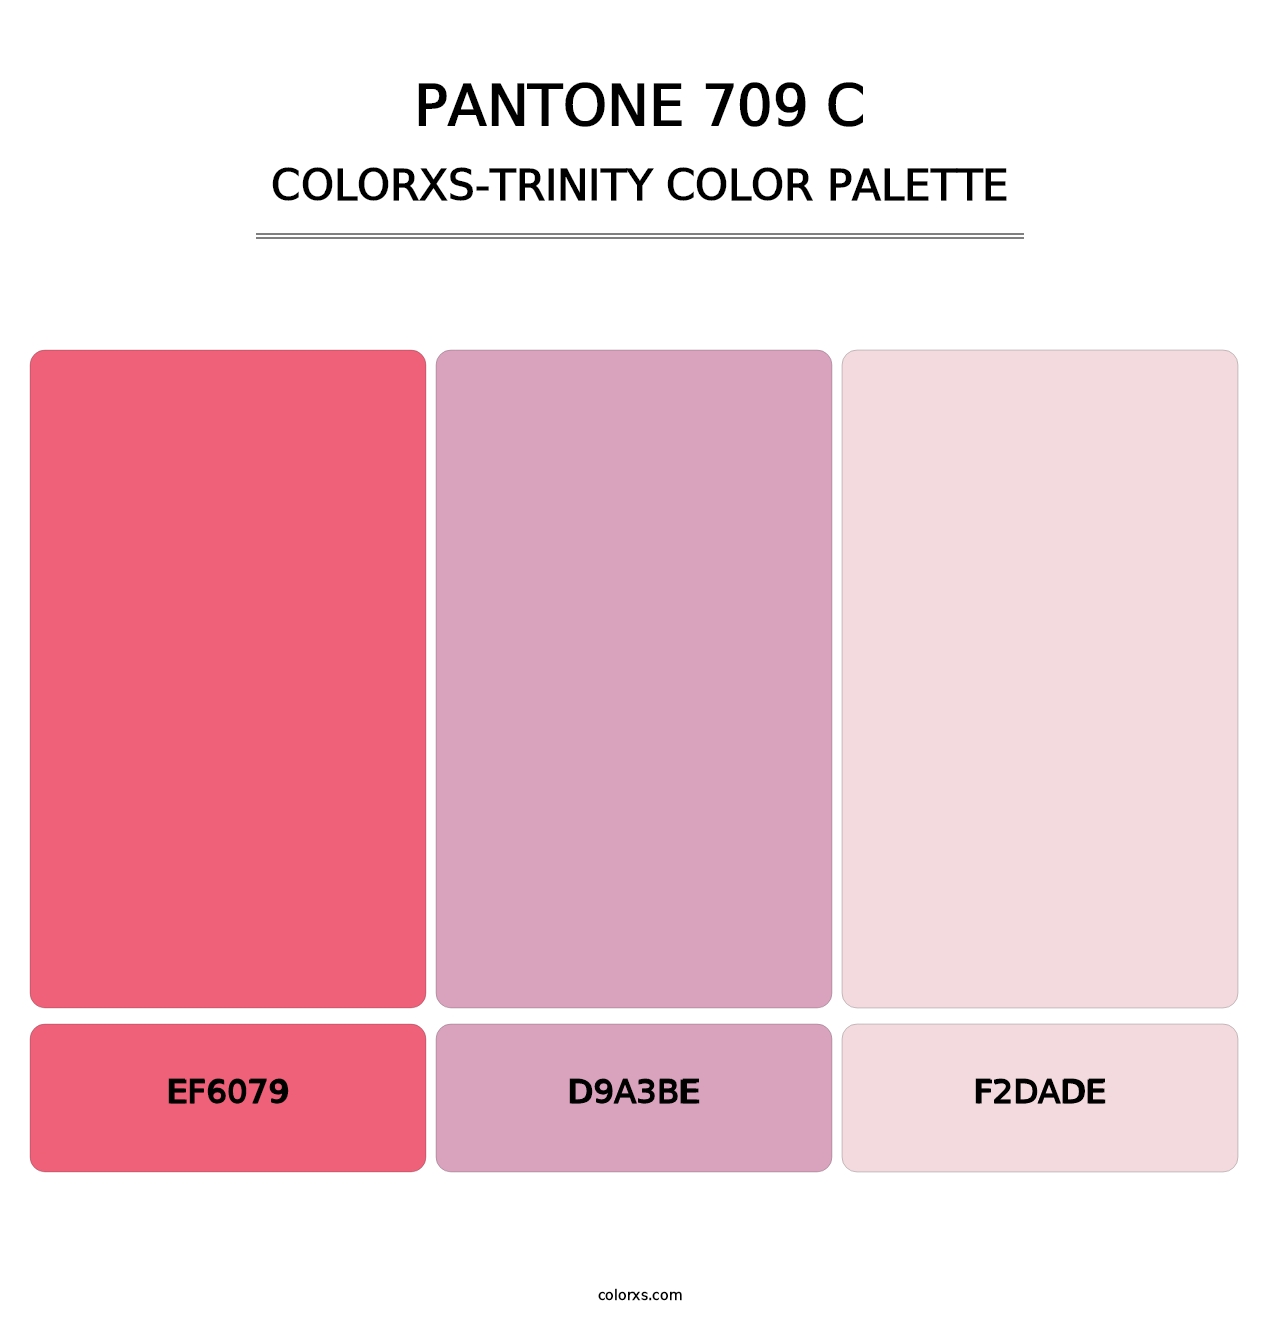 PANTONE 709 C - Colorxs Trinity Palette